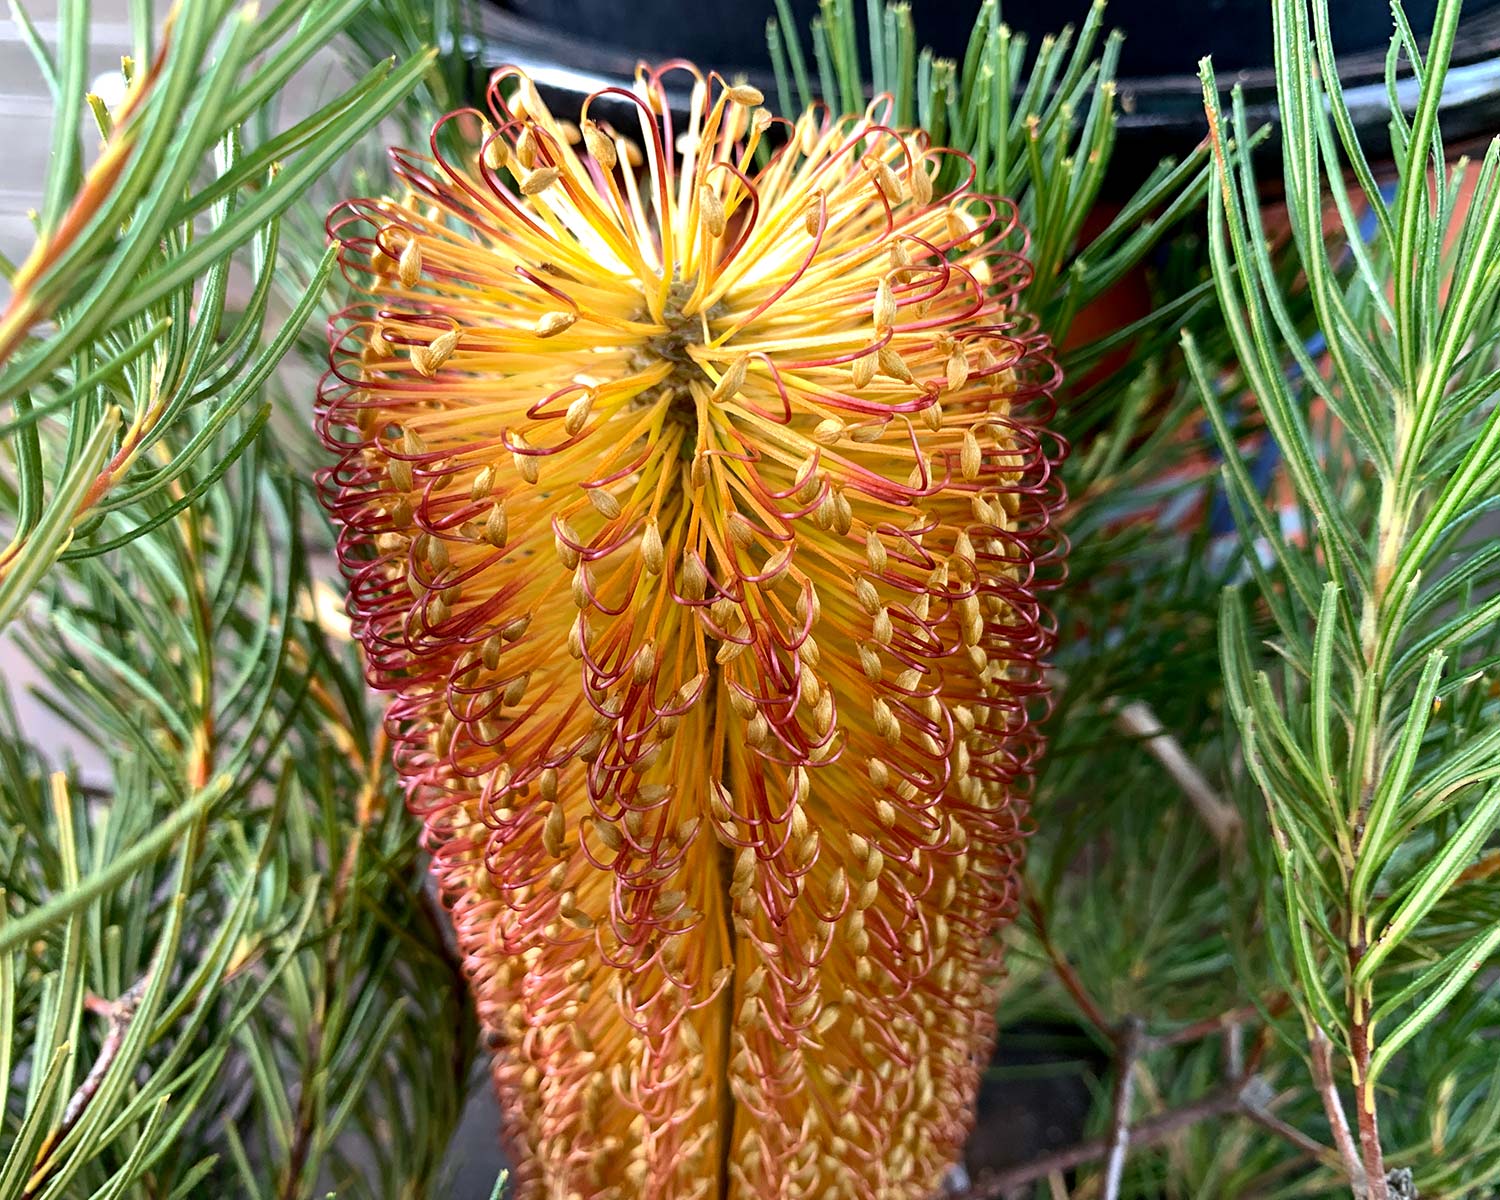 Banksia spinulosa (Hairpin Banksia)